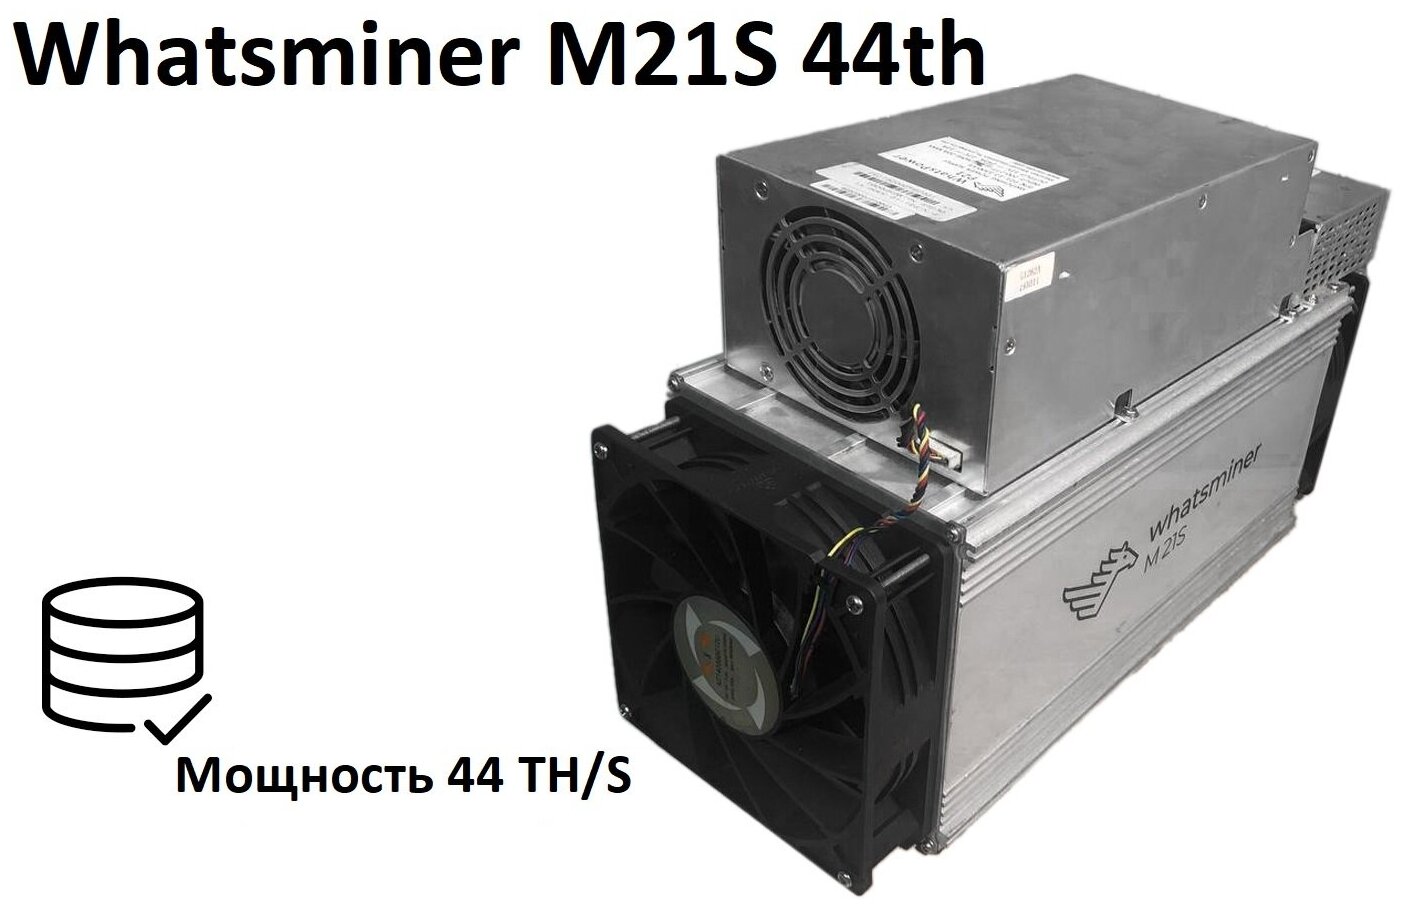 Асик Whatsminer M21S 44th